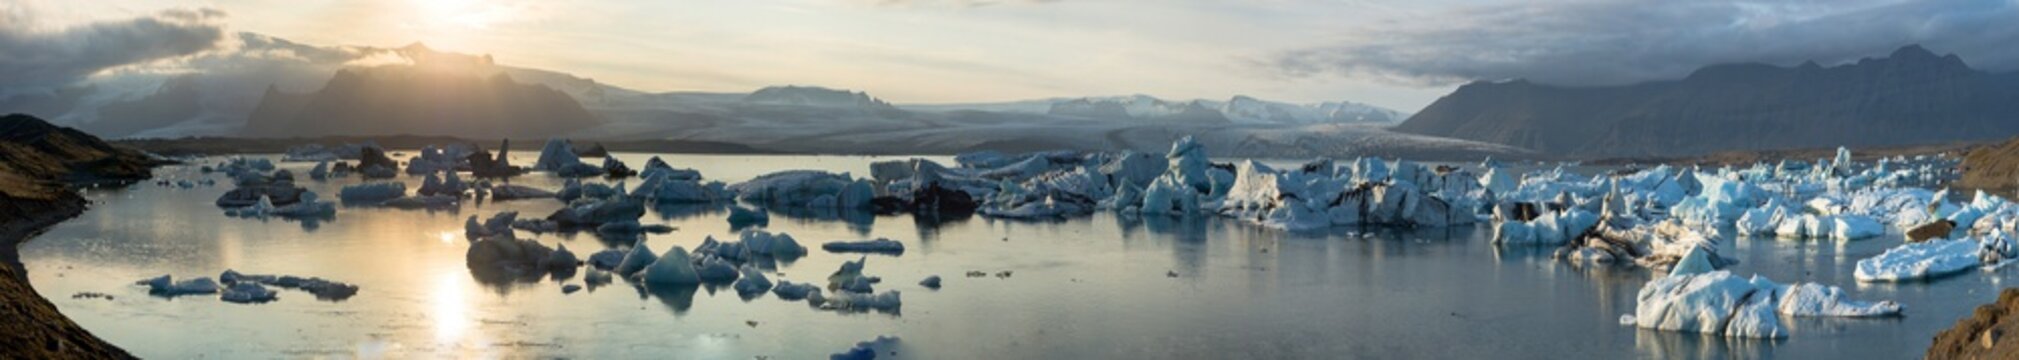 Iceland, Jokulsarlon lagoon panorama, Beautiful cold landscape picture of icelandic glacier lagoon bay,